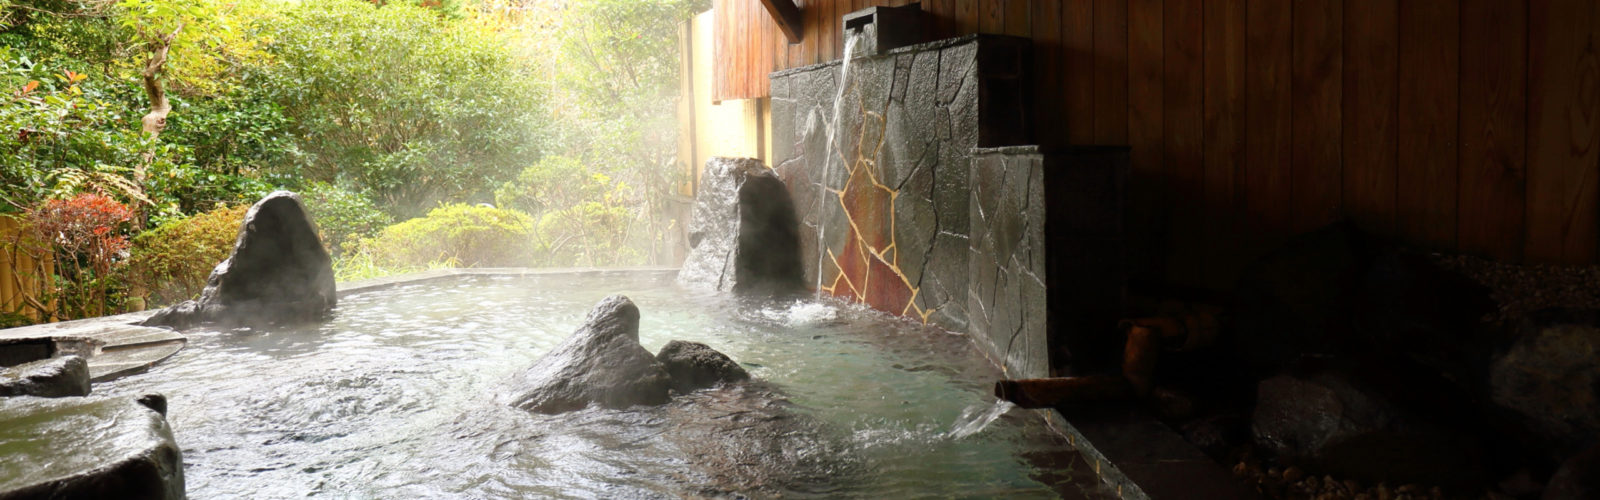 The baths at Yoshimatsu Ryokan, Hakone, Japan